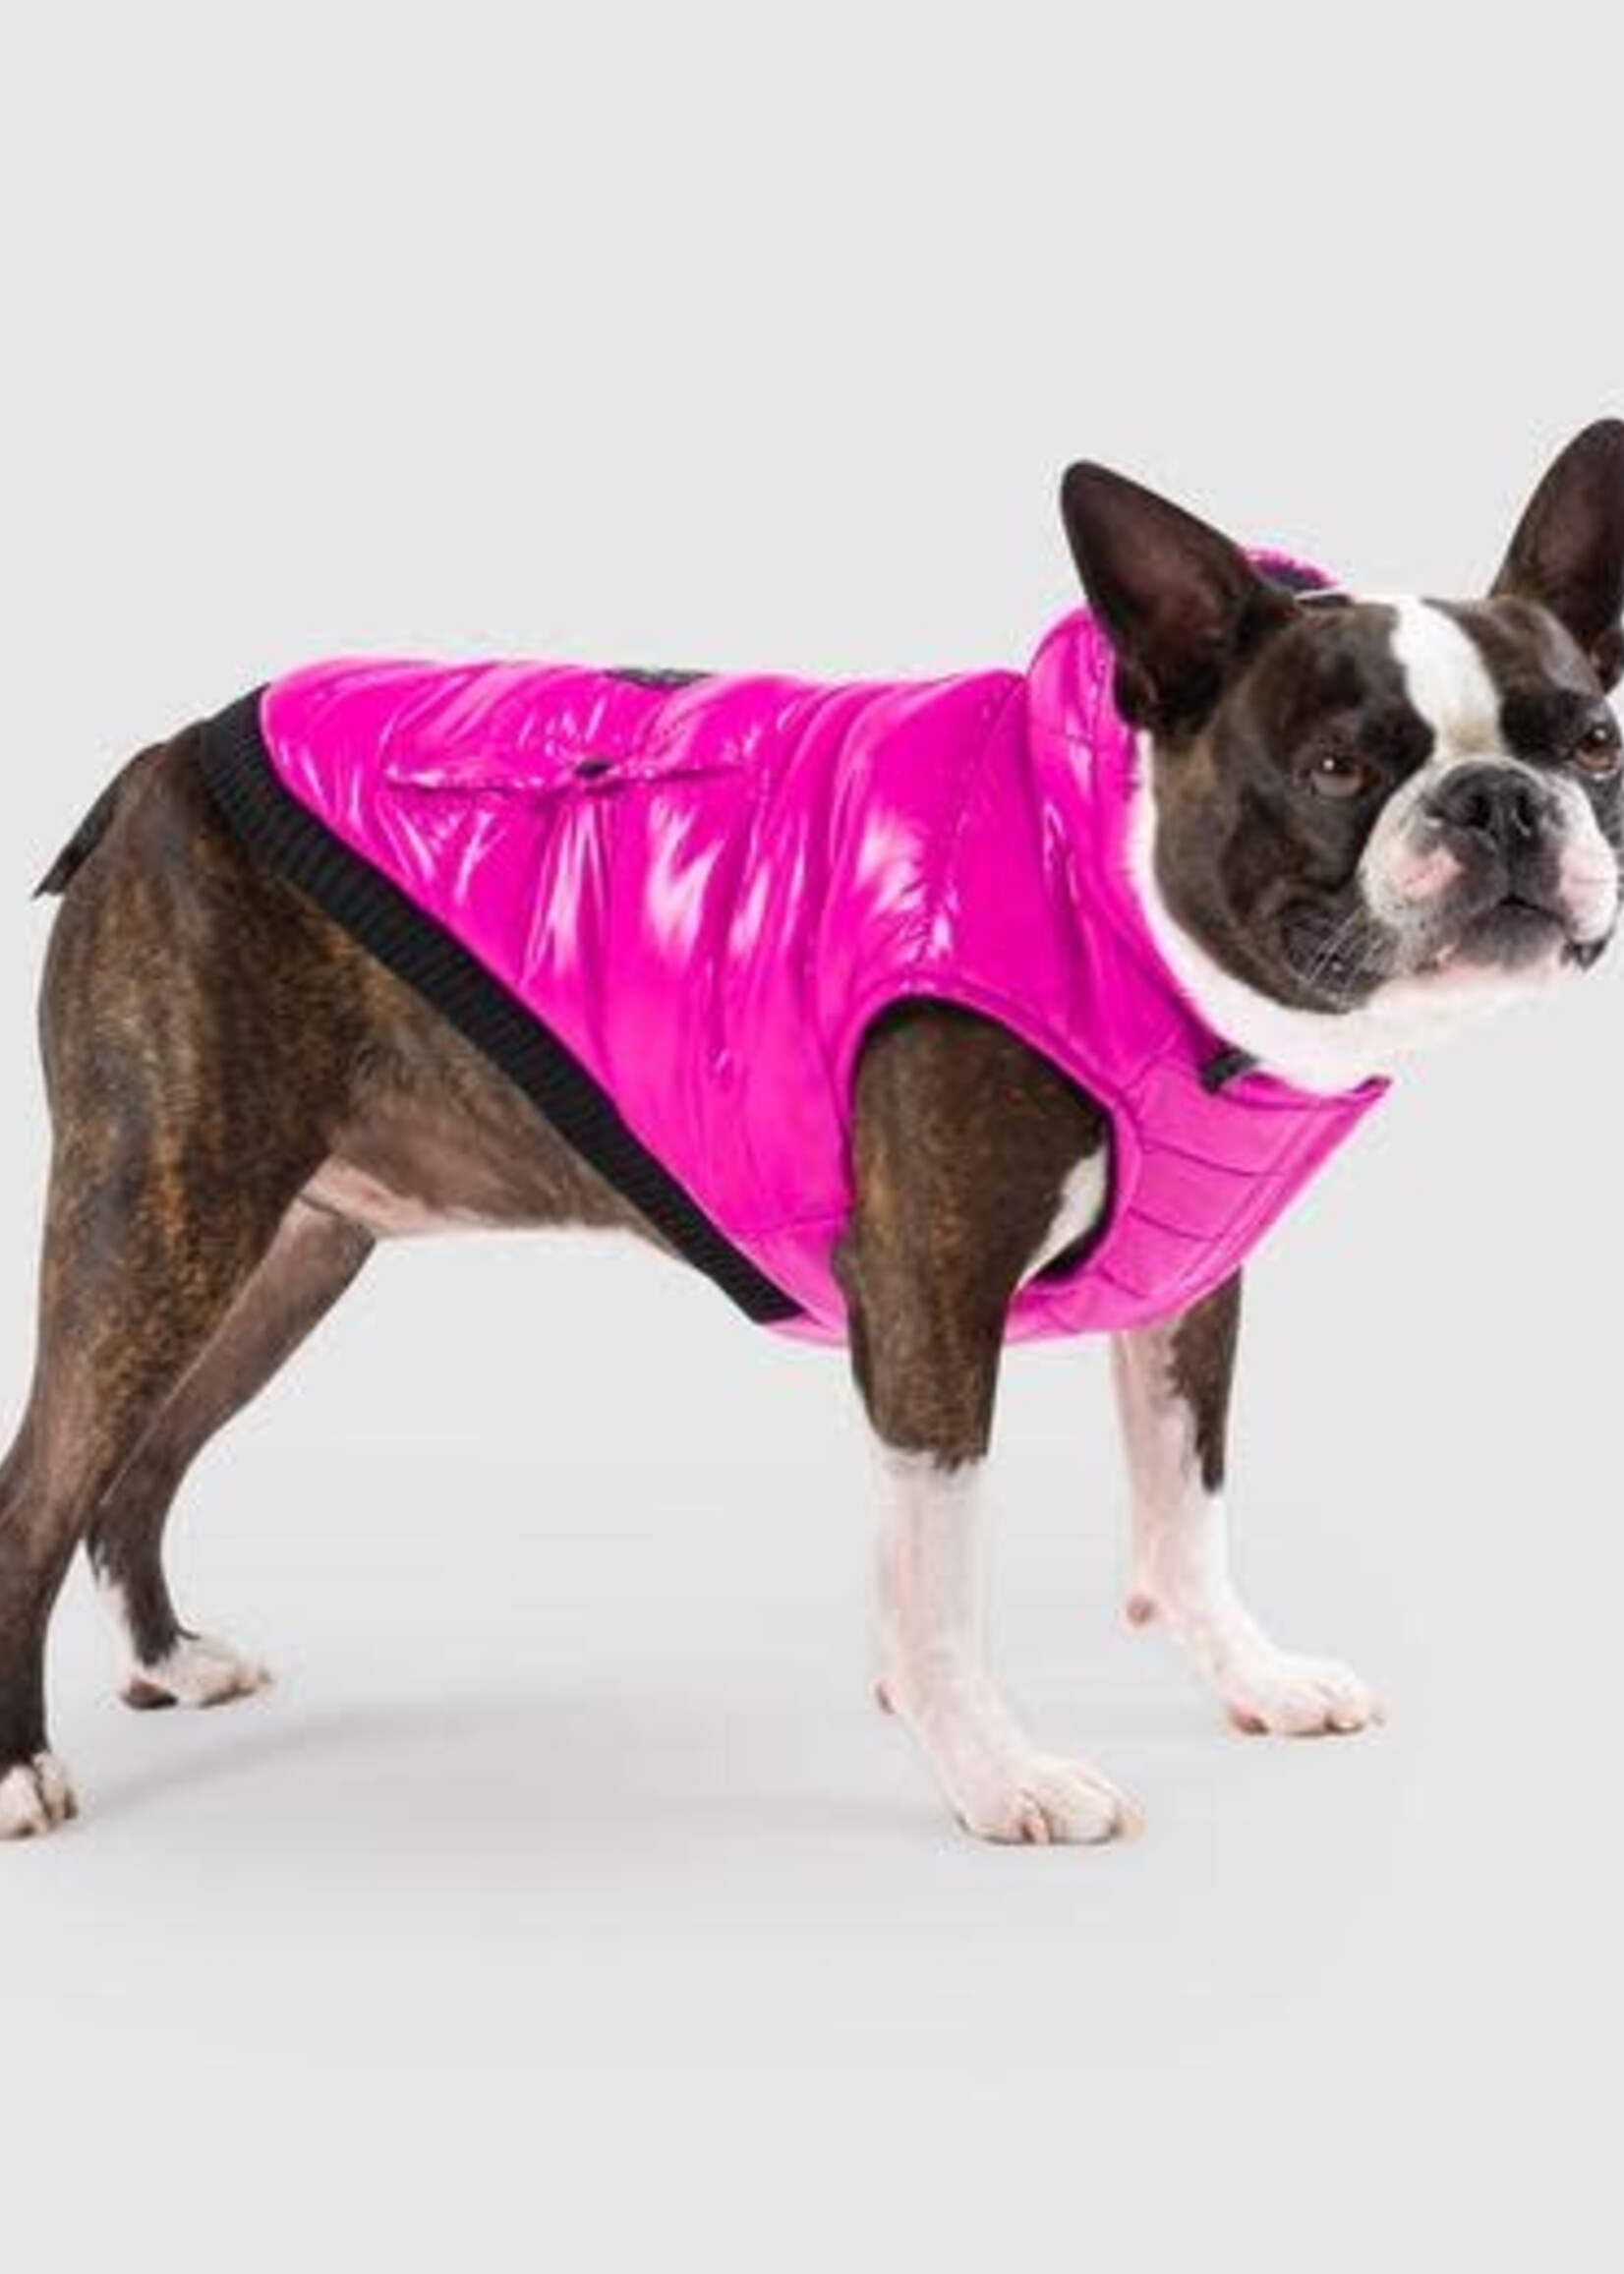 Canada Pooch Canada Pooch Pink Shiny Puffer Vest Dog Jacket